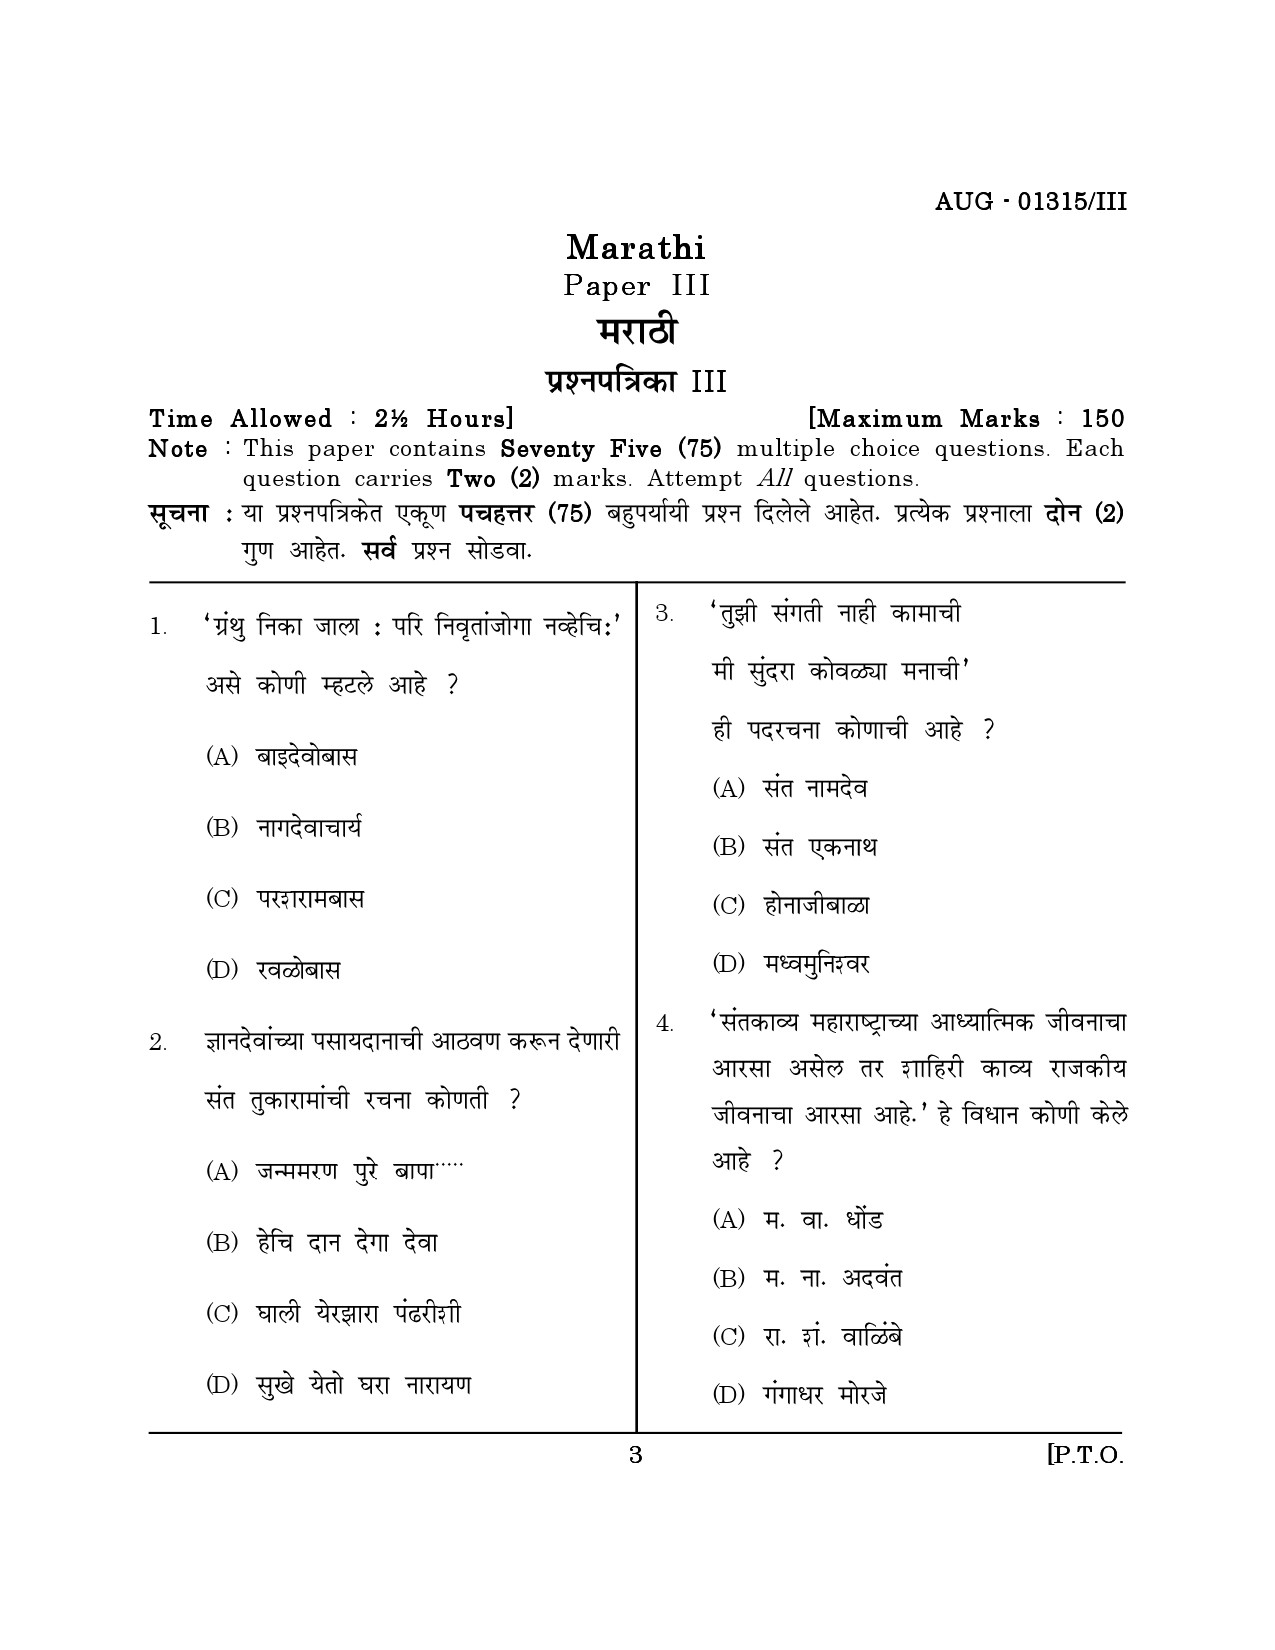 Maharashtra SET Marathi Question Paper III August 2015 2